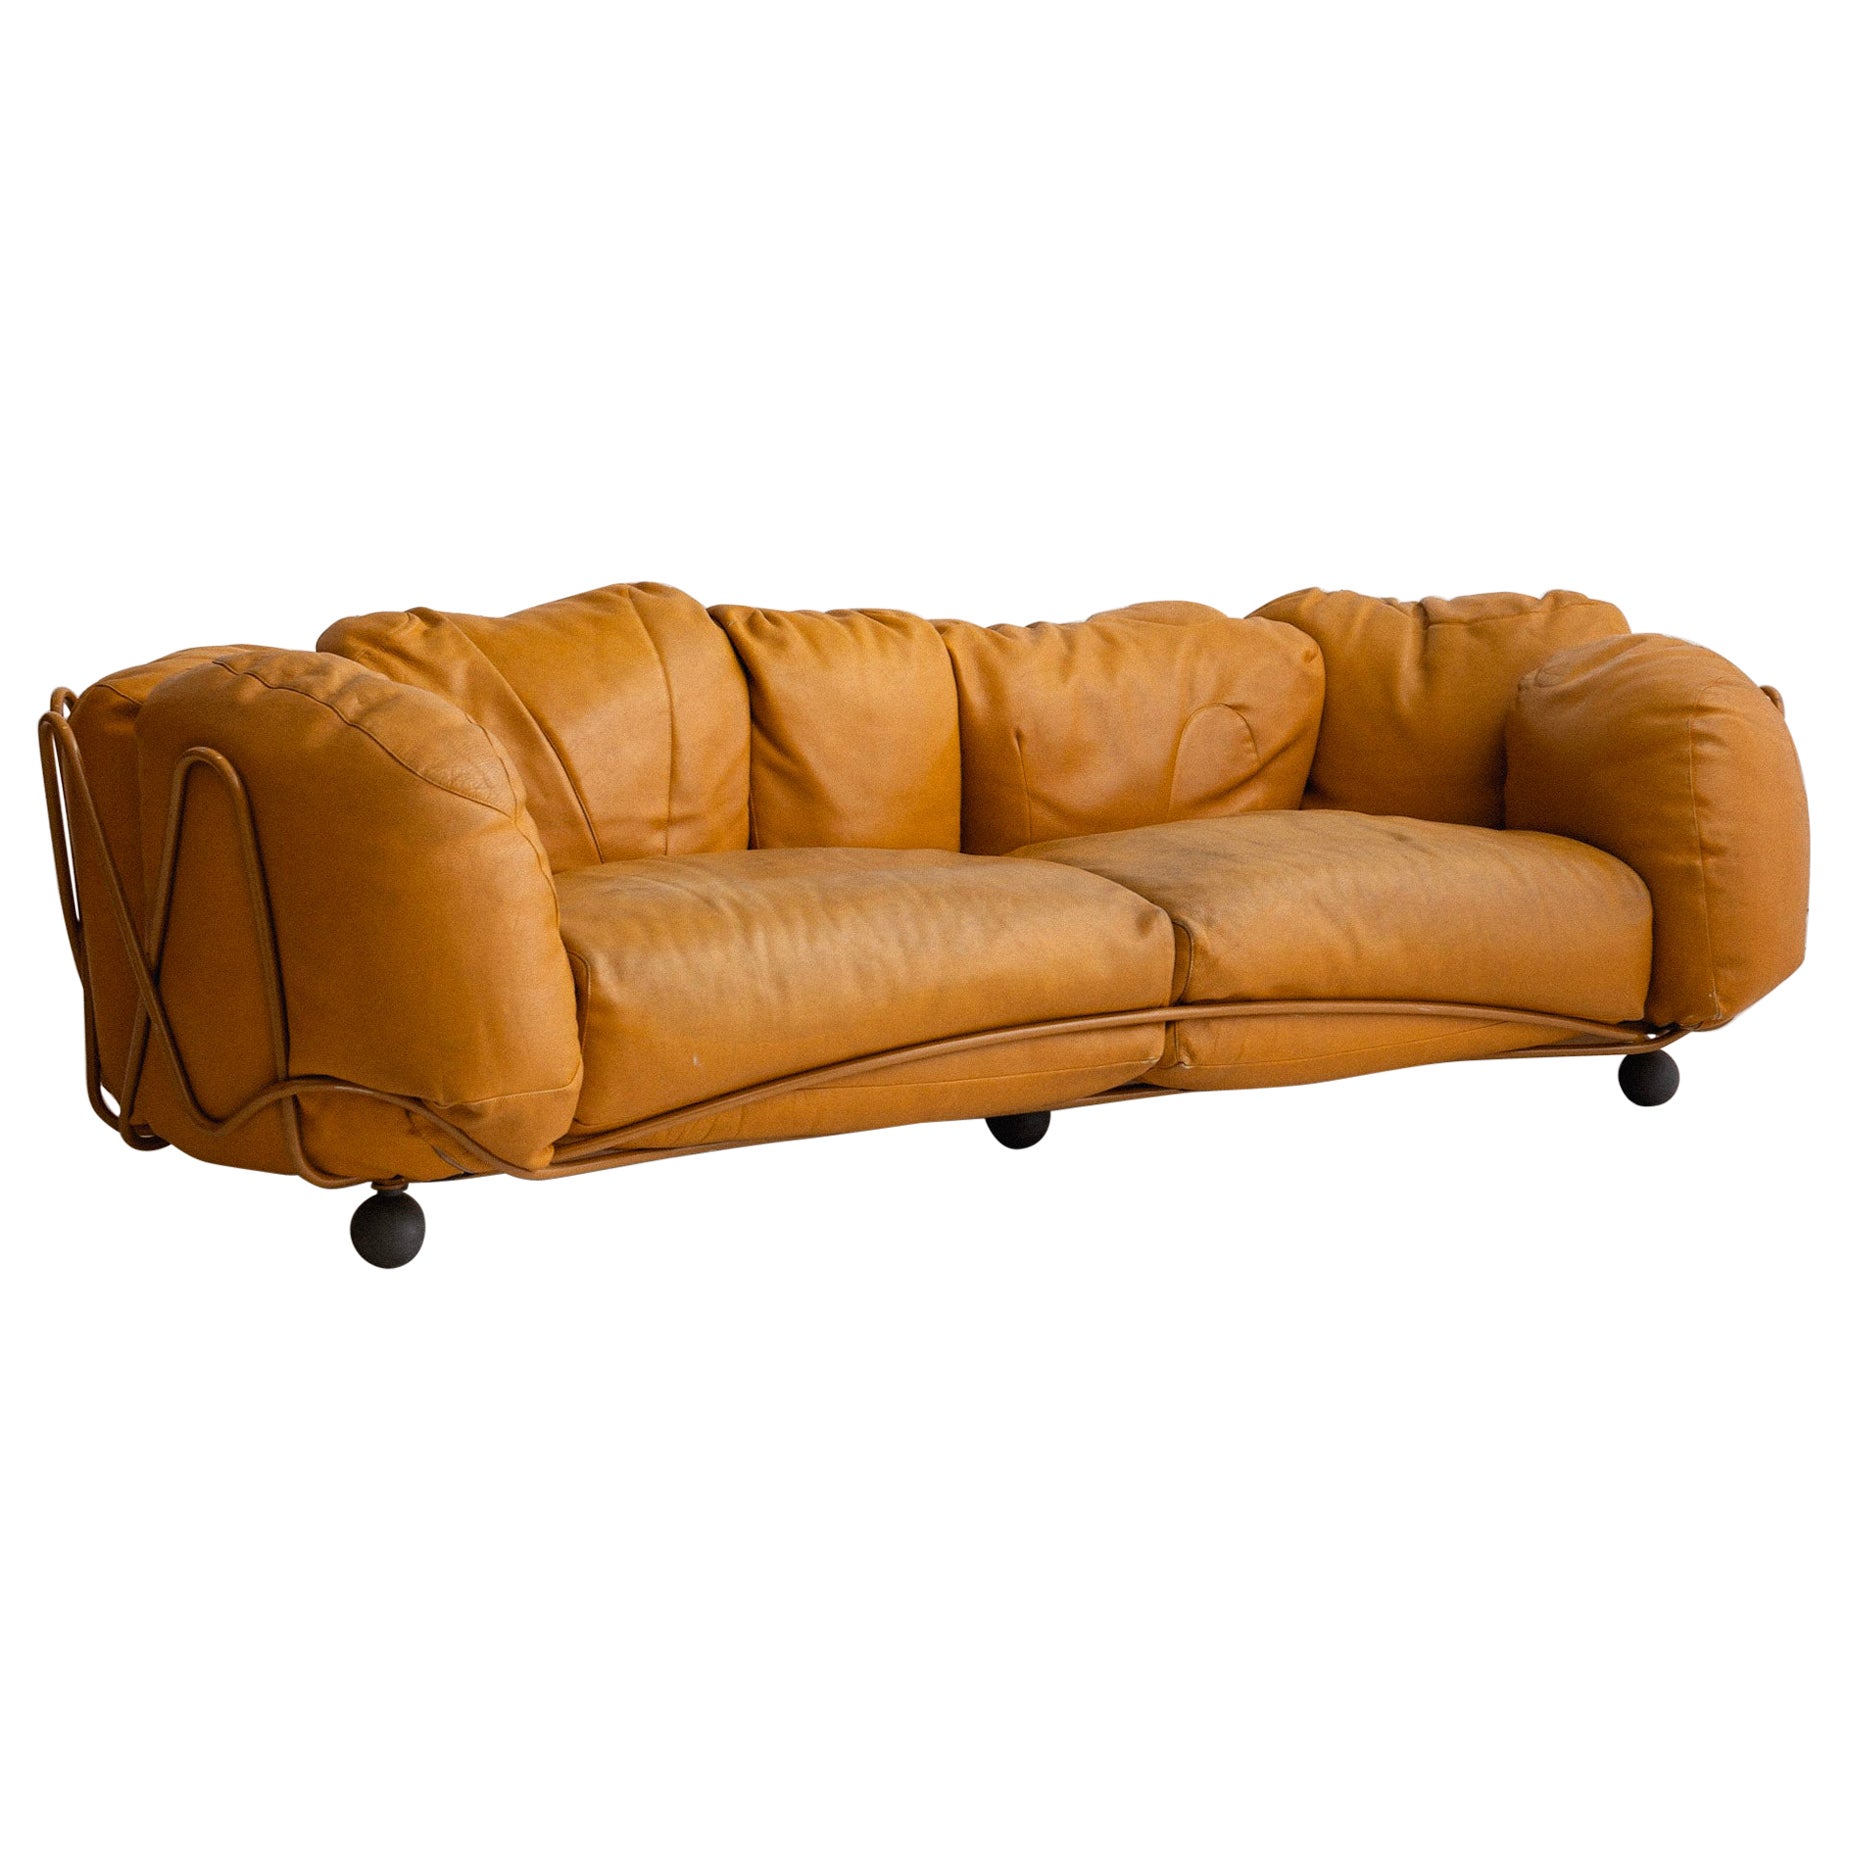 'Corbeille' Leather Sofa by Francesco Binfare for Edra